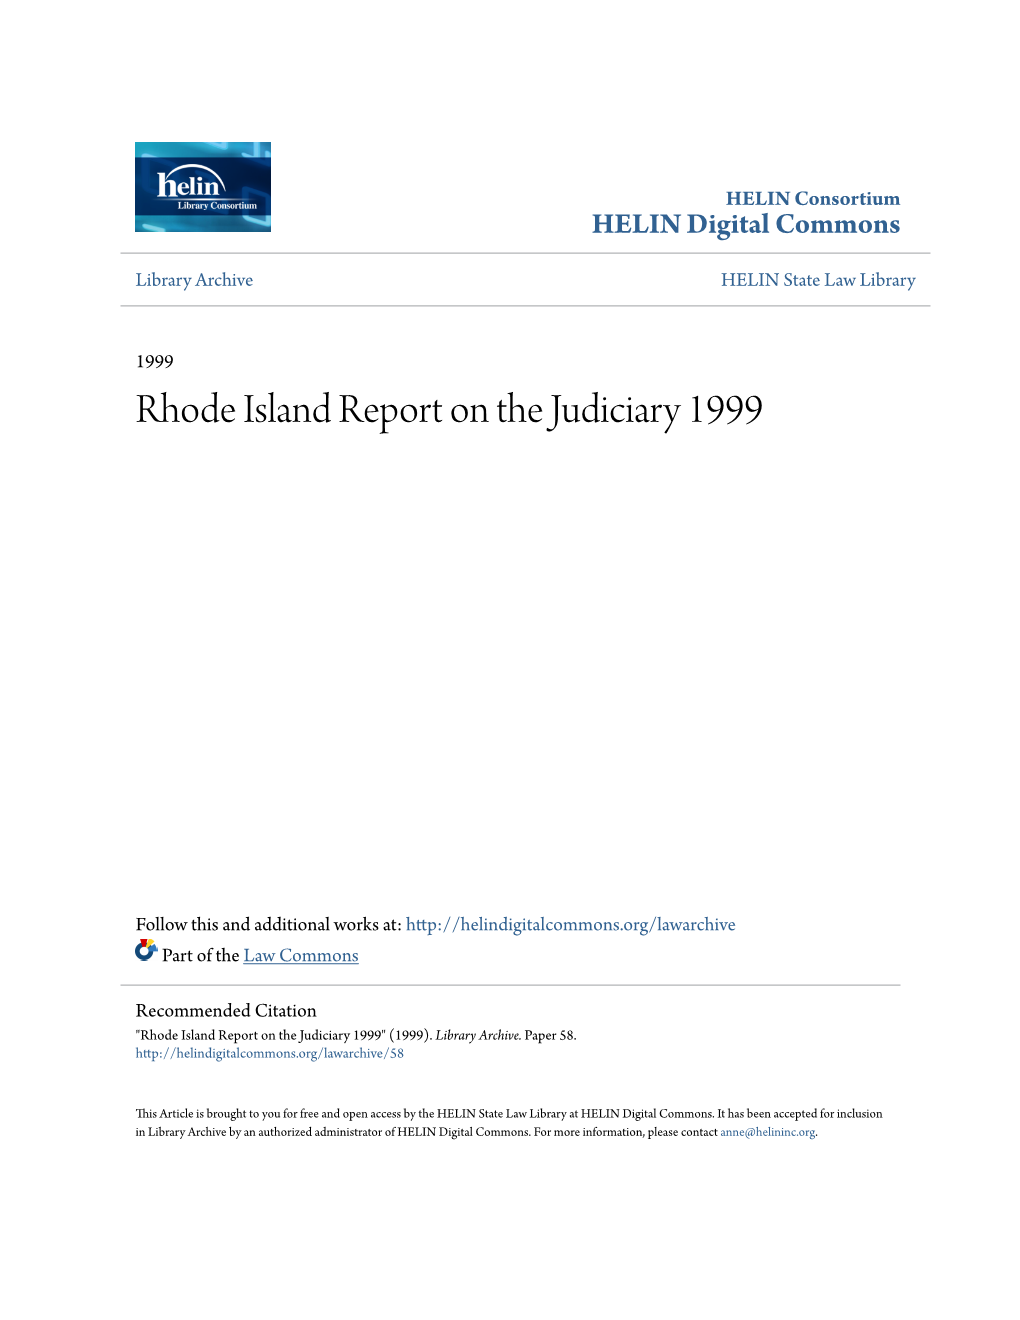 Rhode Island Report on the Judiciary 1999